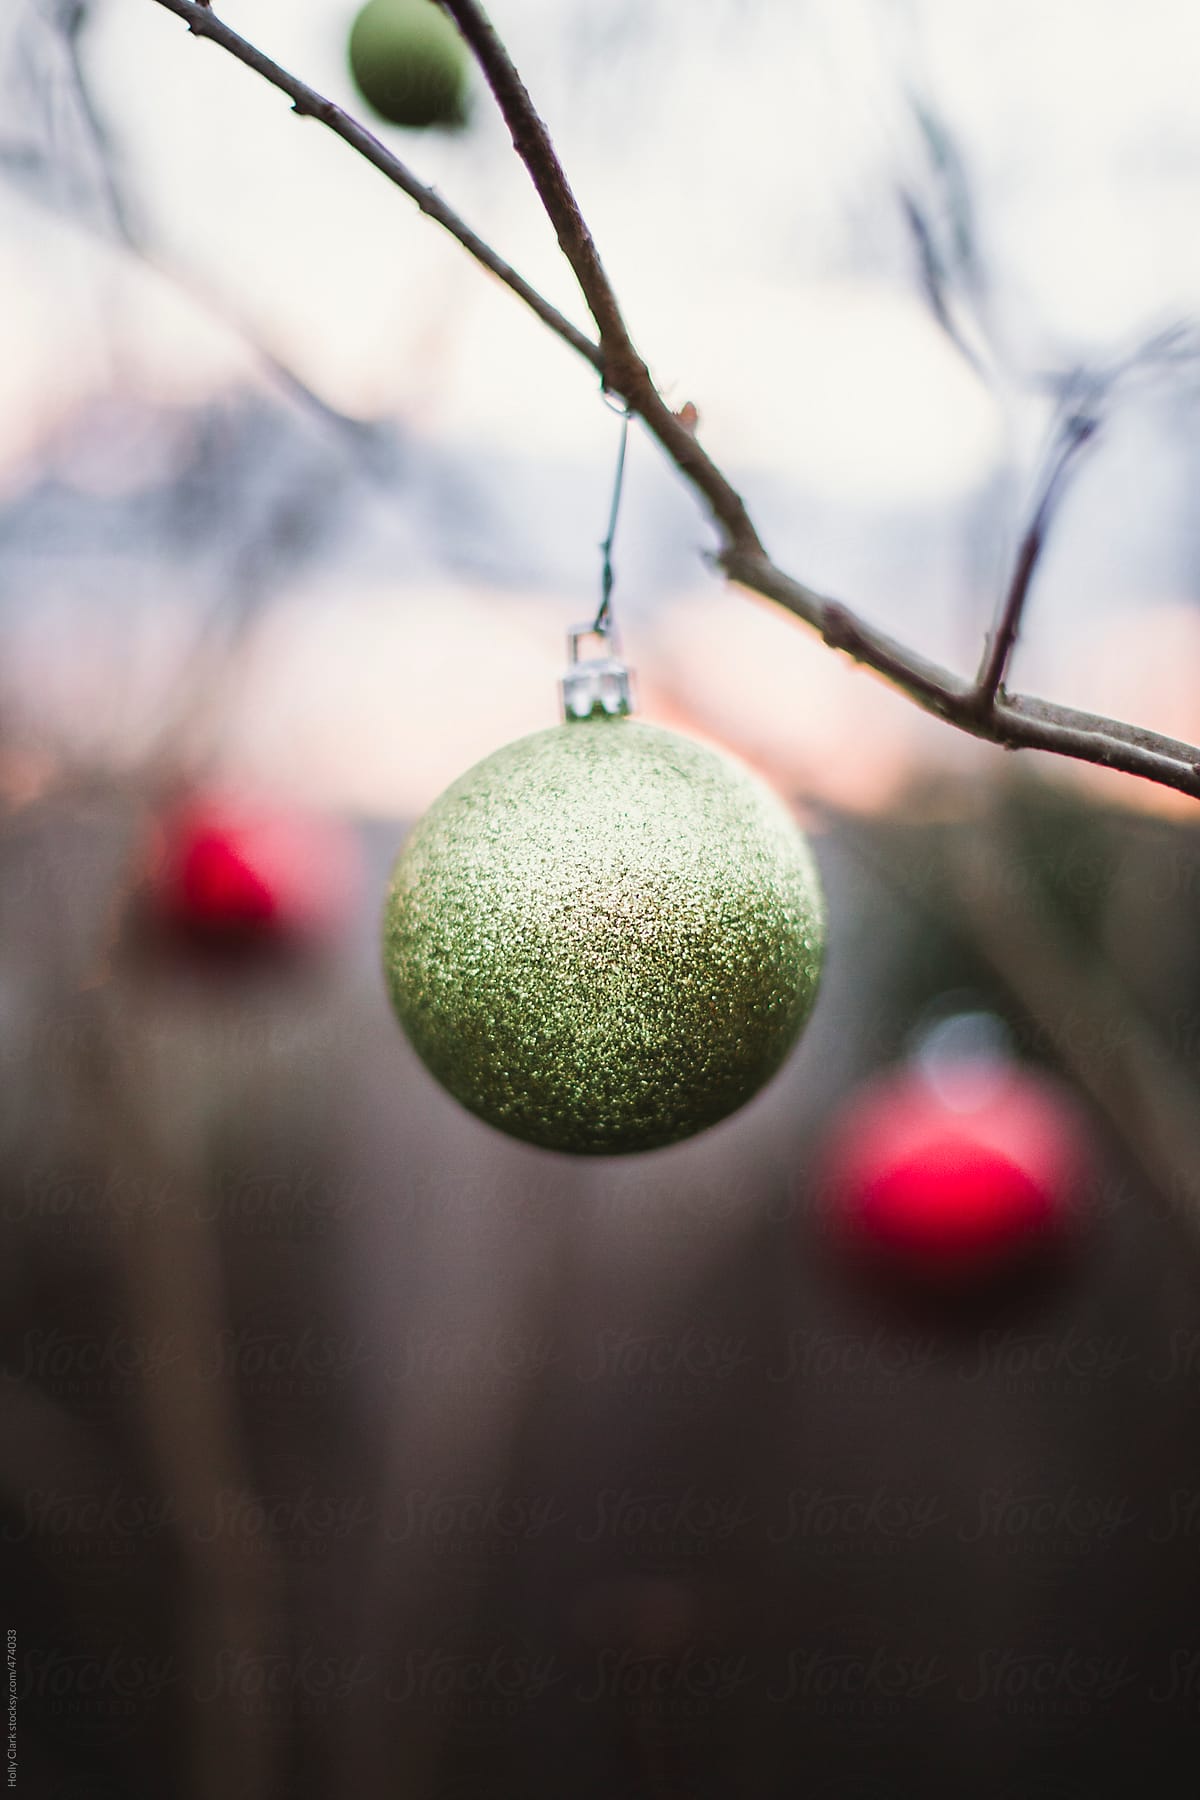 Glittery green Christmas ornament hangs on branch